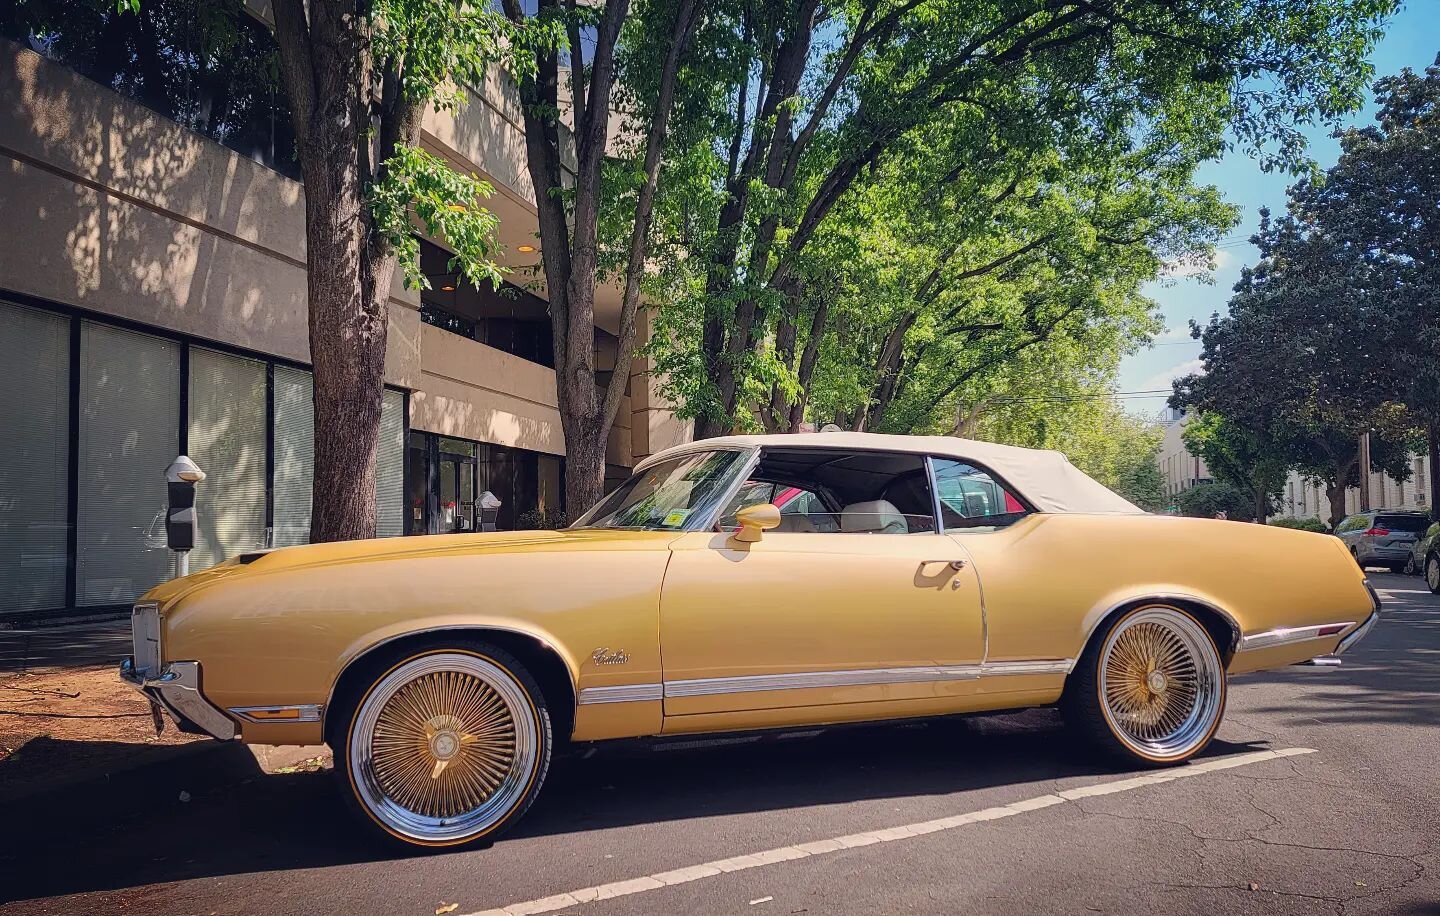 CutlassGold #oldsmobile #cutlass #Olds #cutlasssupreme #gold #spokes #convertible #droptop #style #spring #og